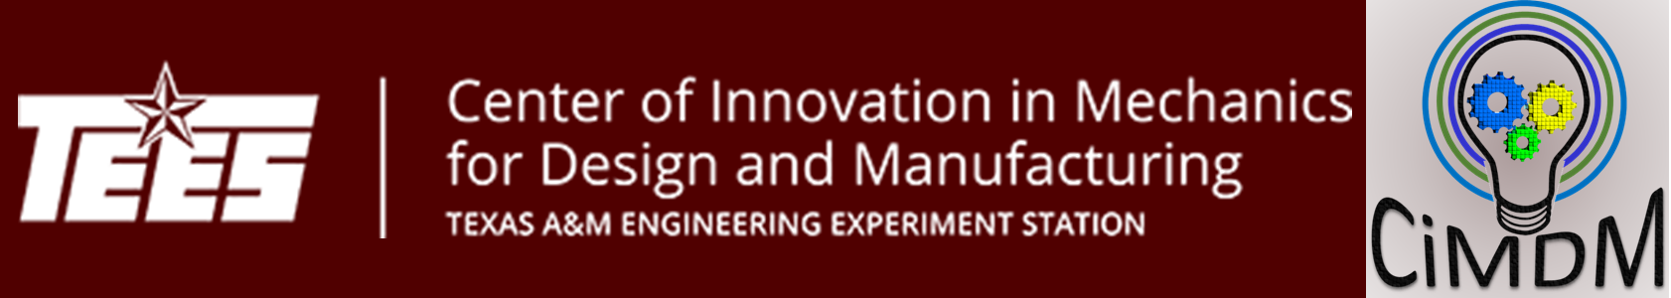 CiMDM TAMU and Innovation logo